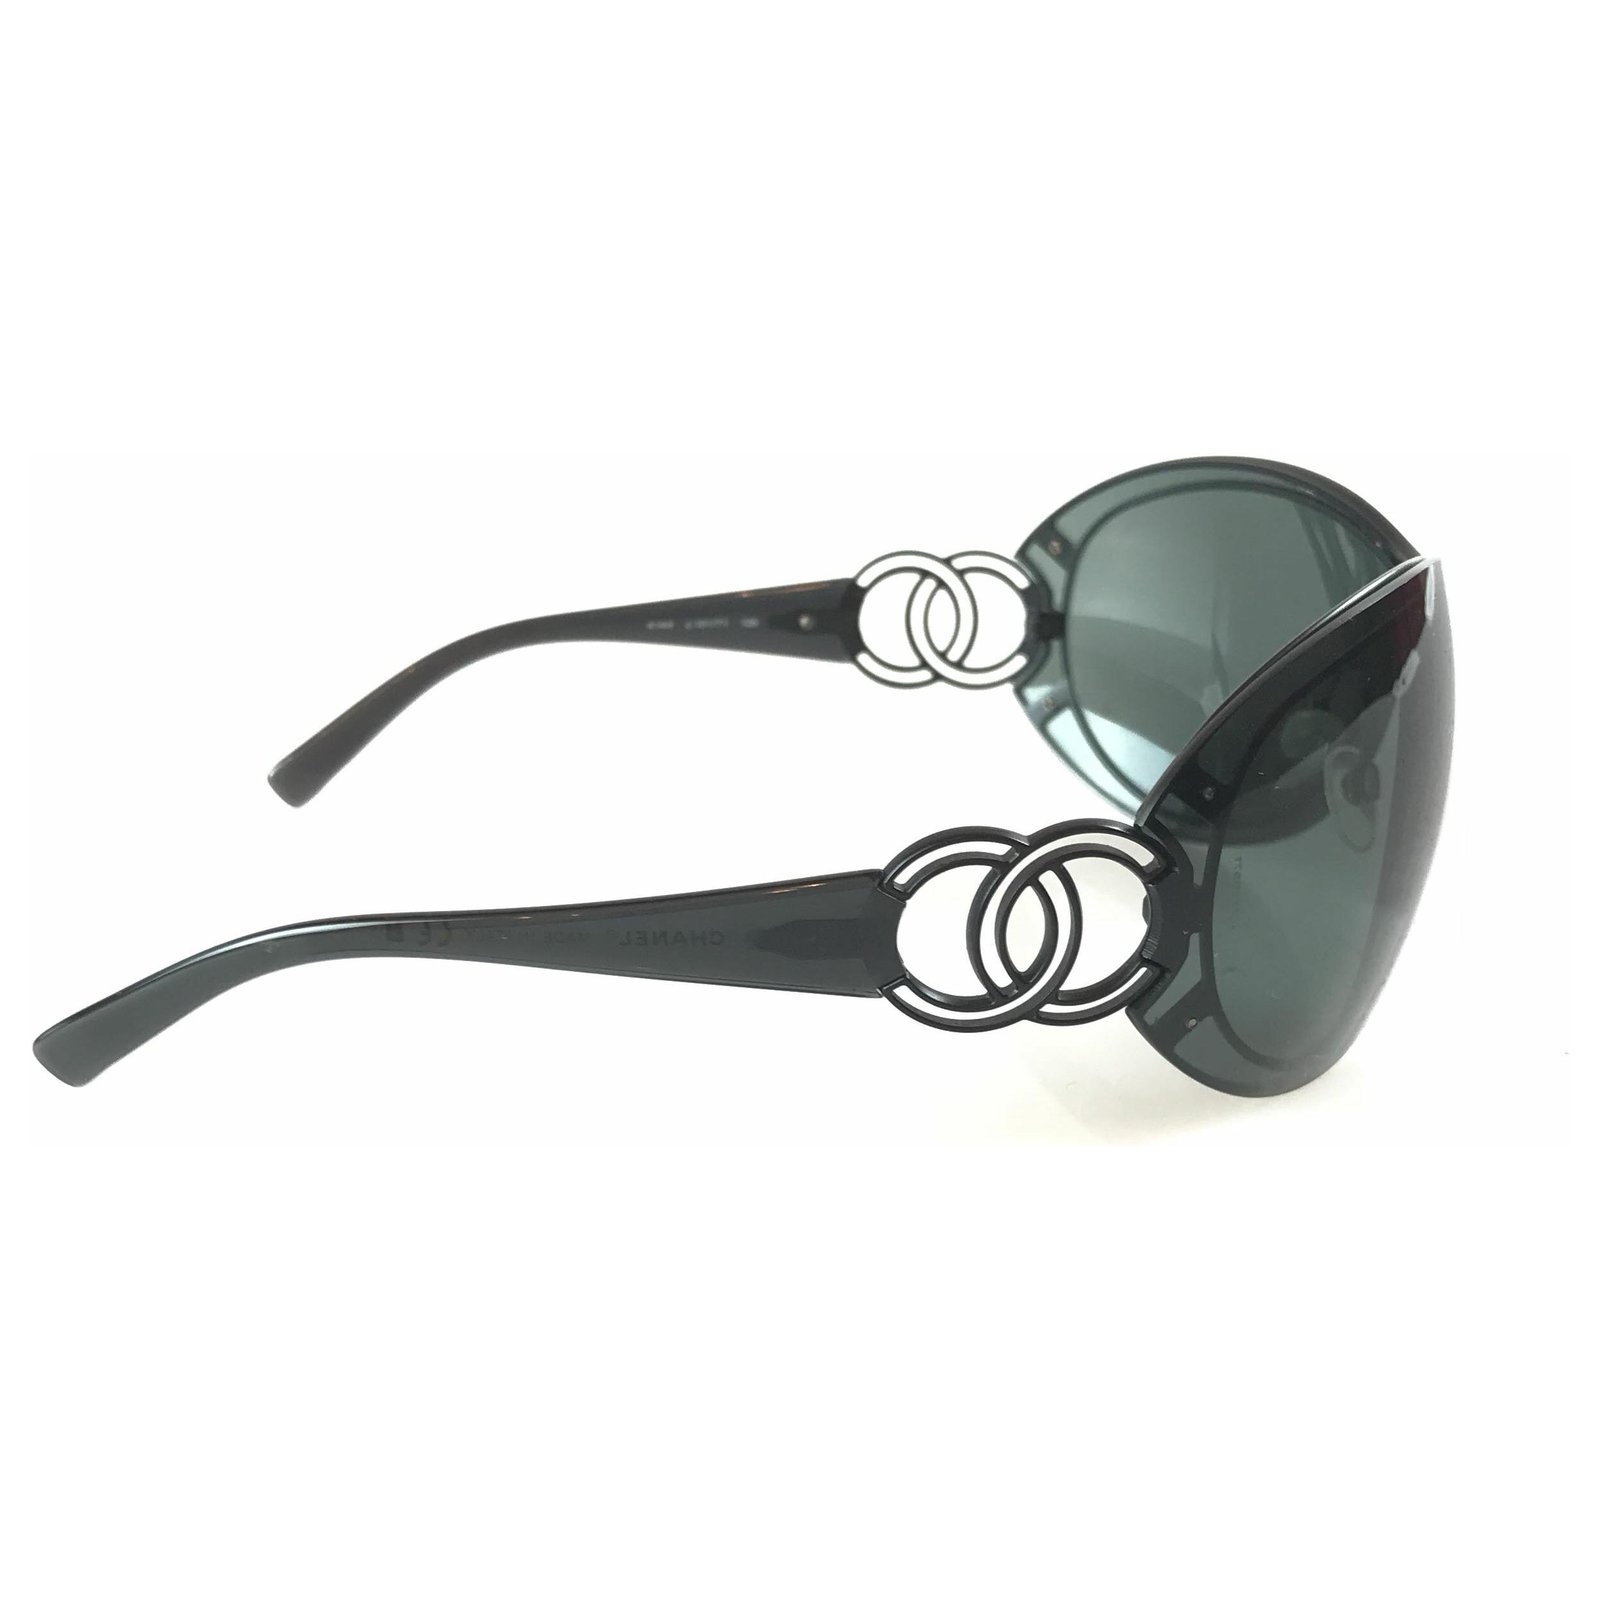 CHANEL Wraparound sunglasses